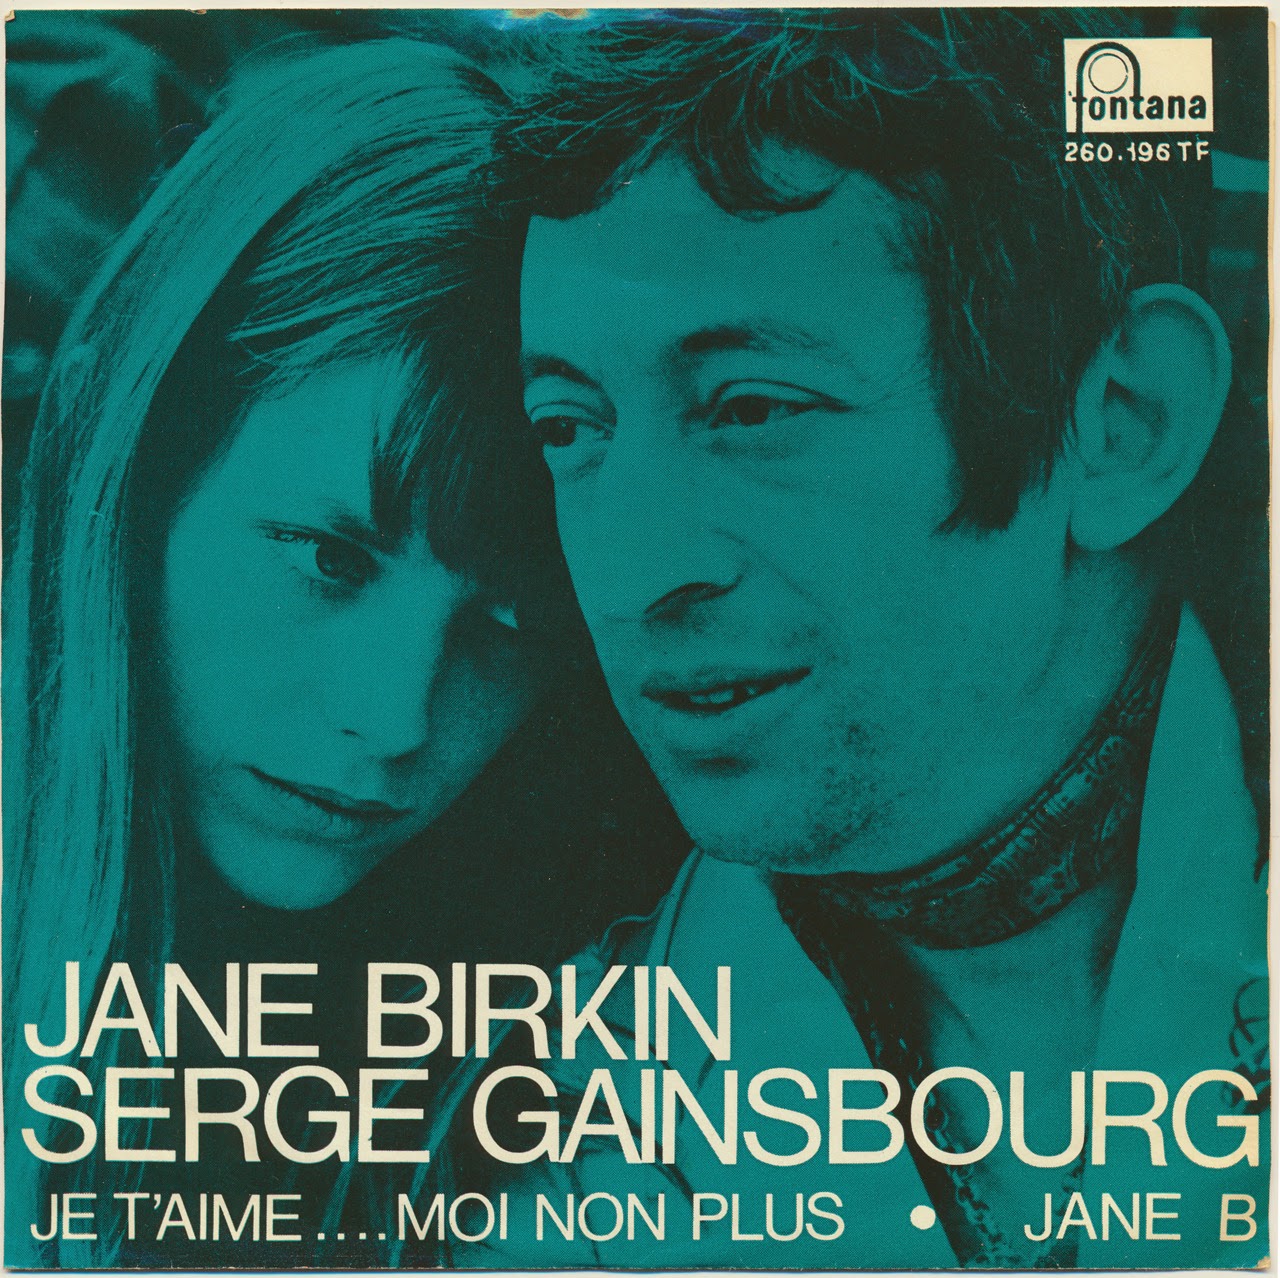 Música Crònica: Jane Birkin & Serge Gainsbourg - "Je t'aime... moi non